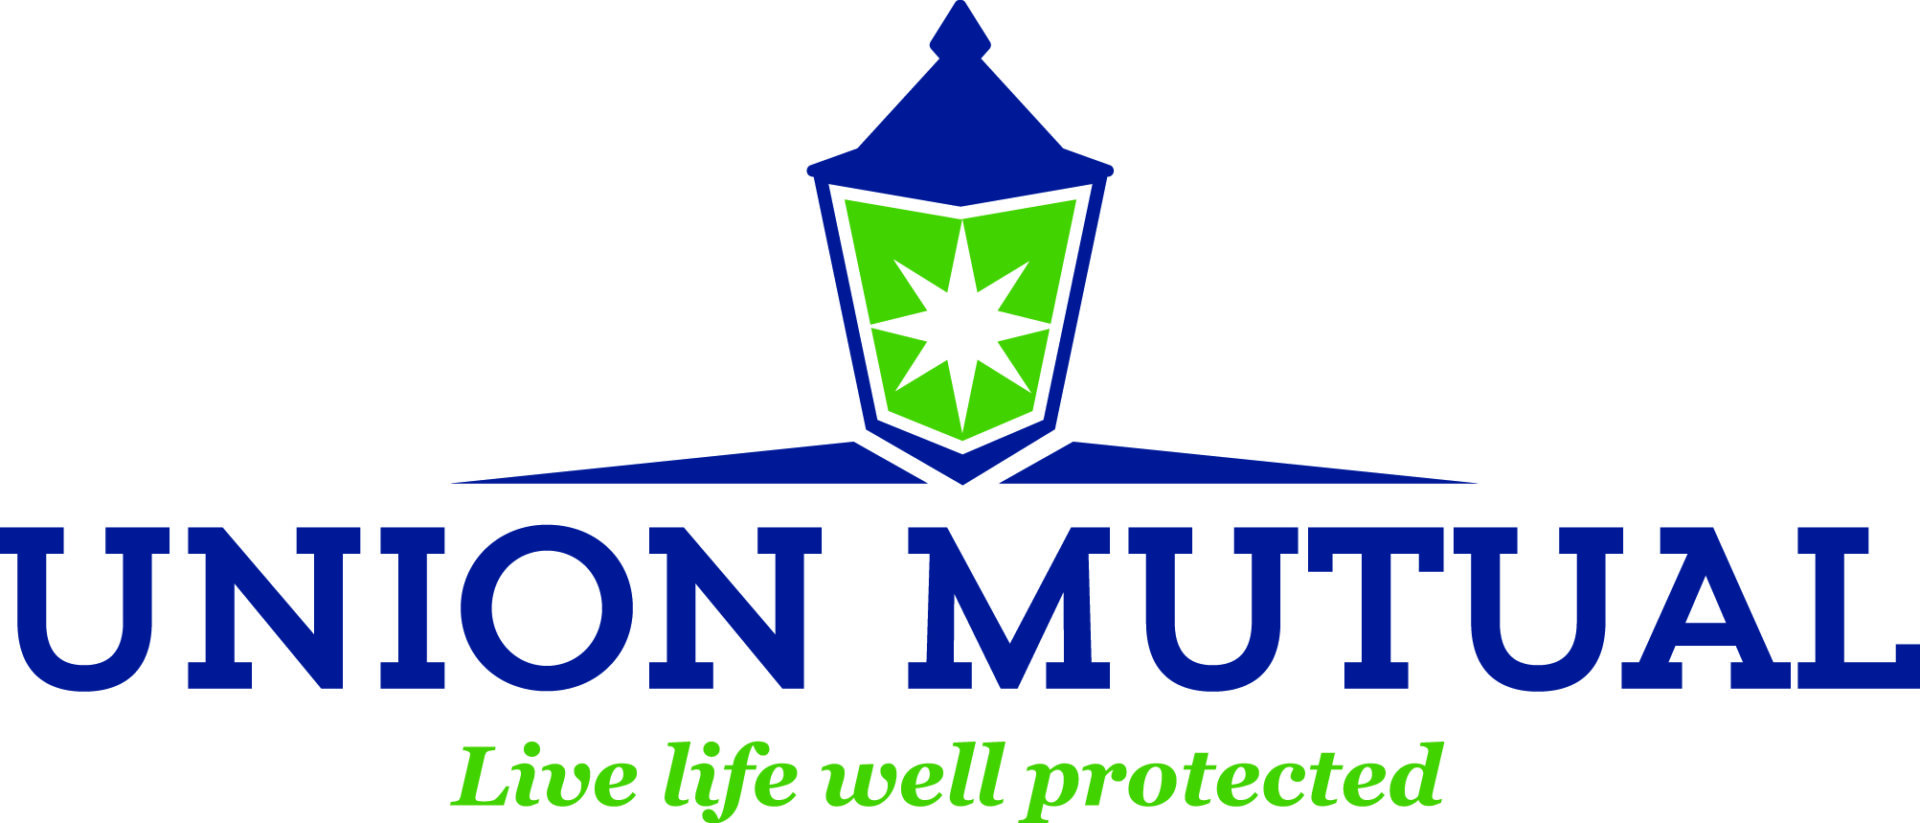 UM Logo - Horizontal with slogan